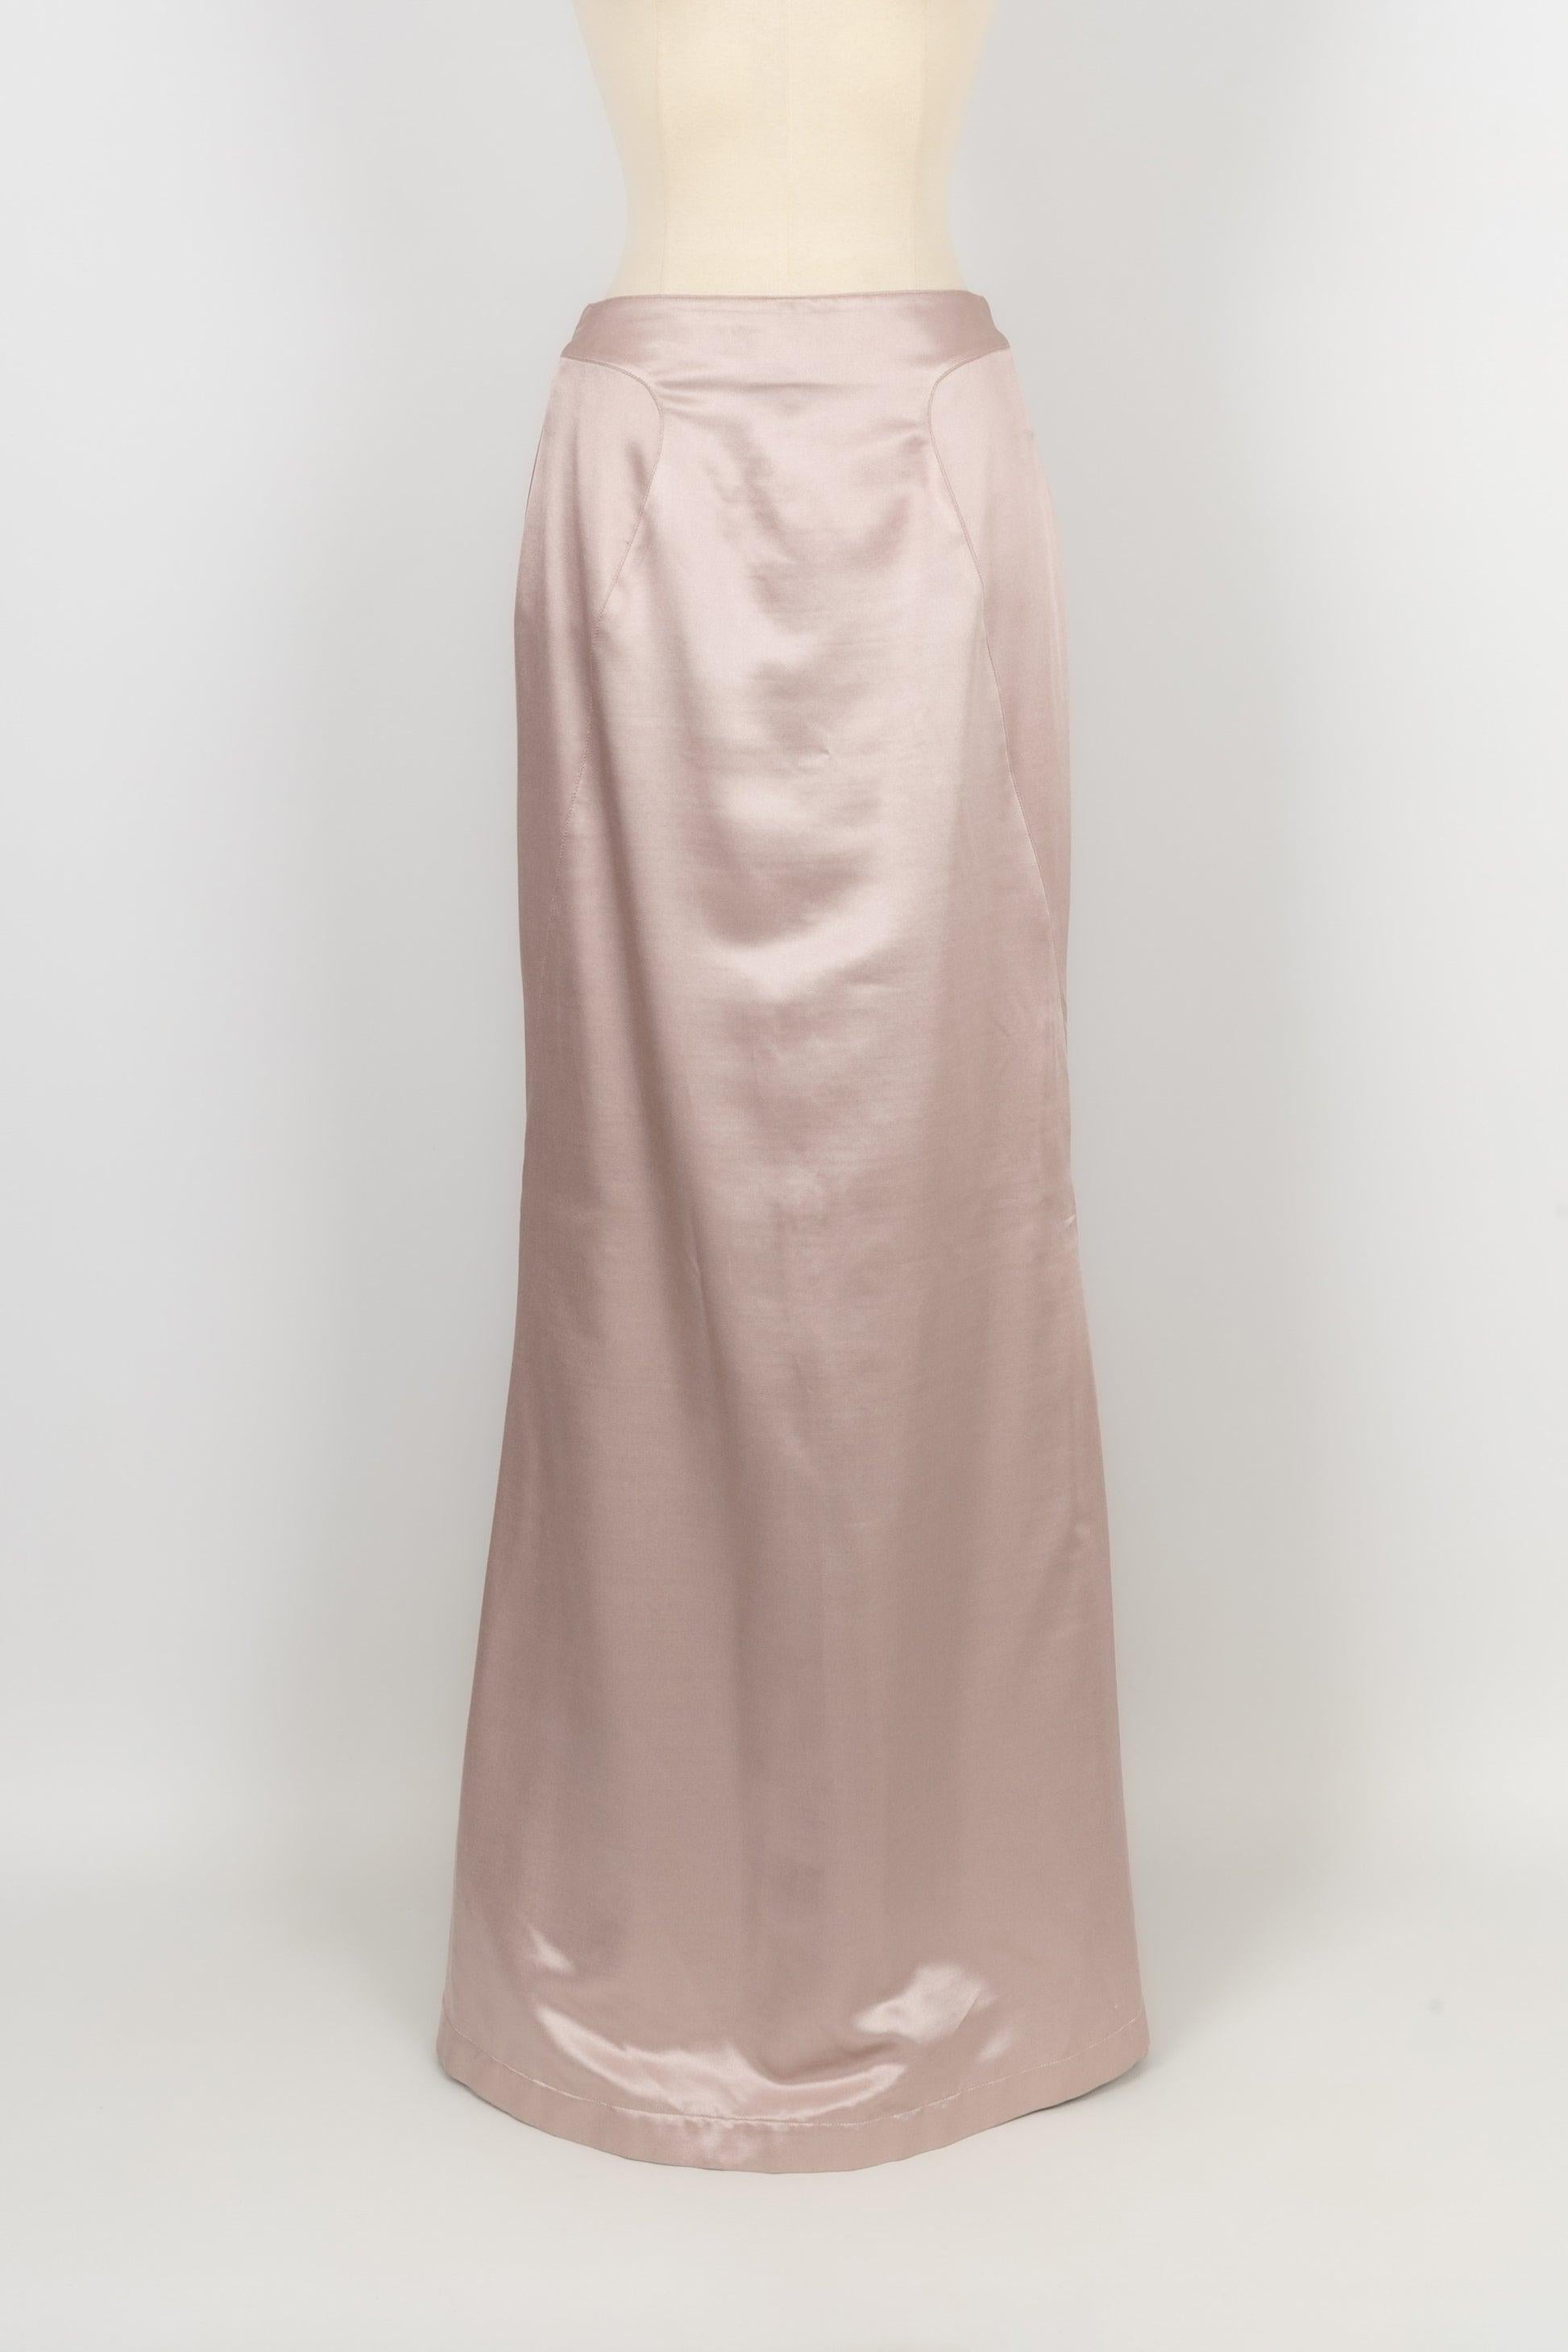 Thierry Mugler Pale Mauve Tone Silk Couture Set 38FR For Sale 5